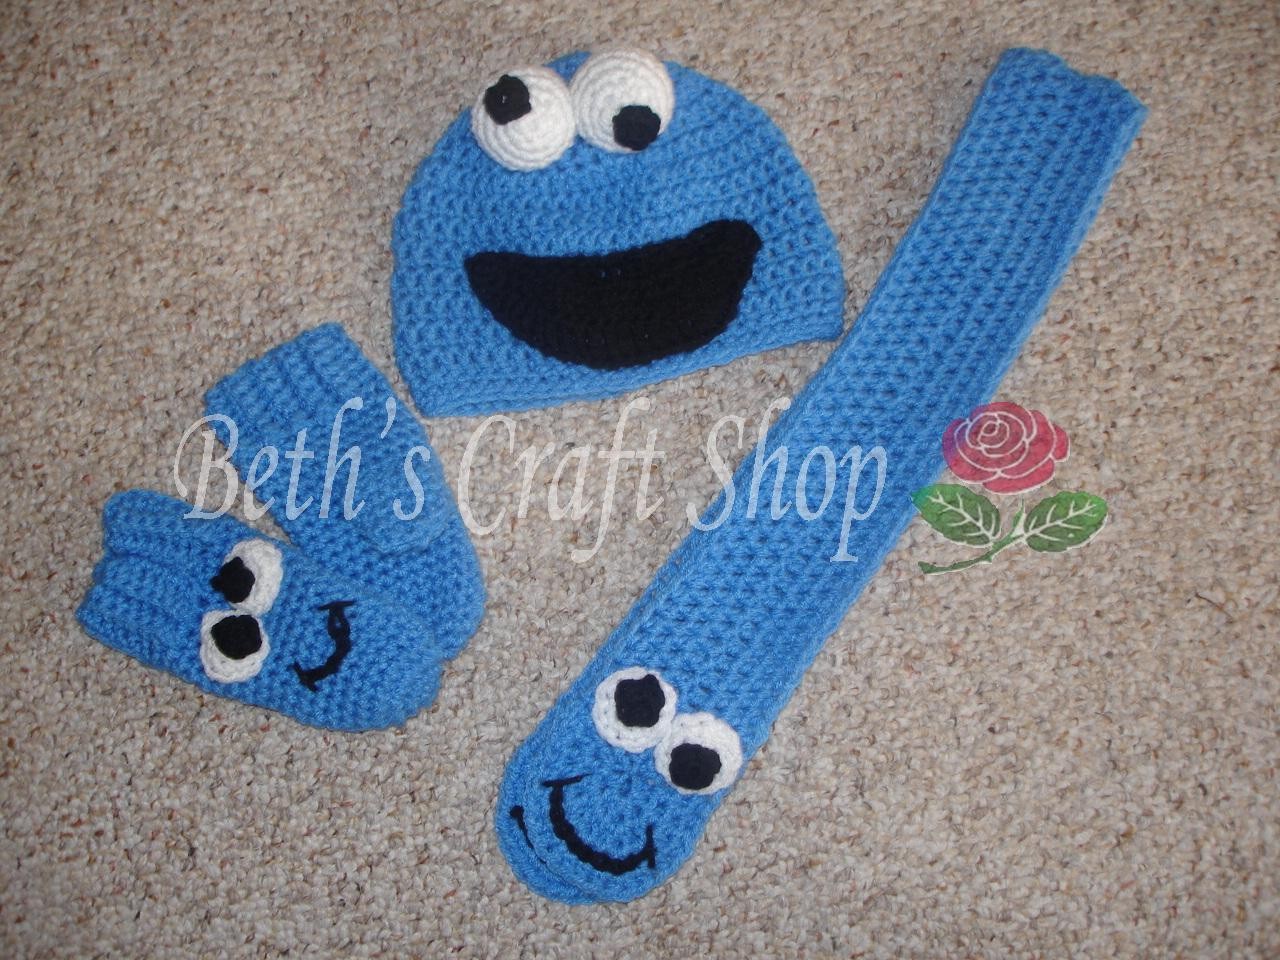 Blue Monster Crochet Hat/Scarf/Mitten Set, Beth's Craft Shop